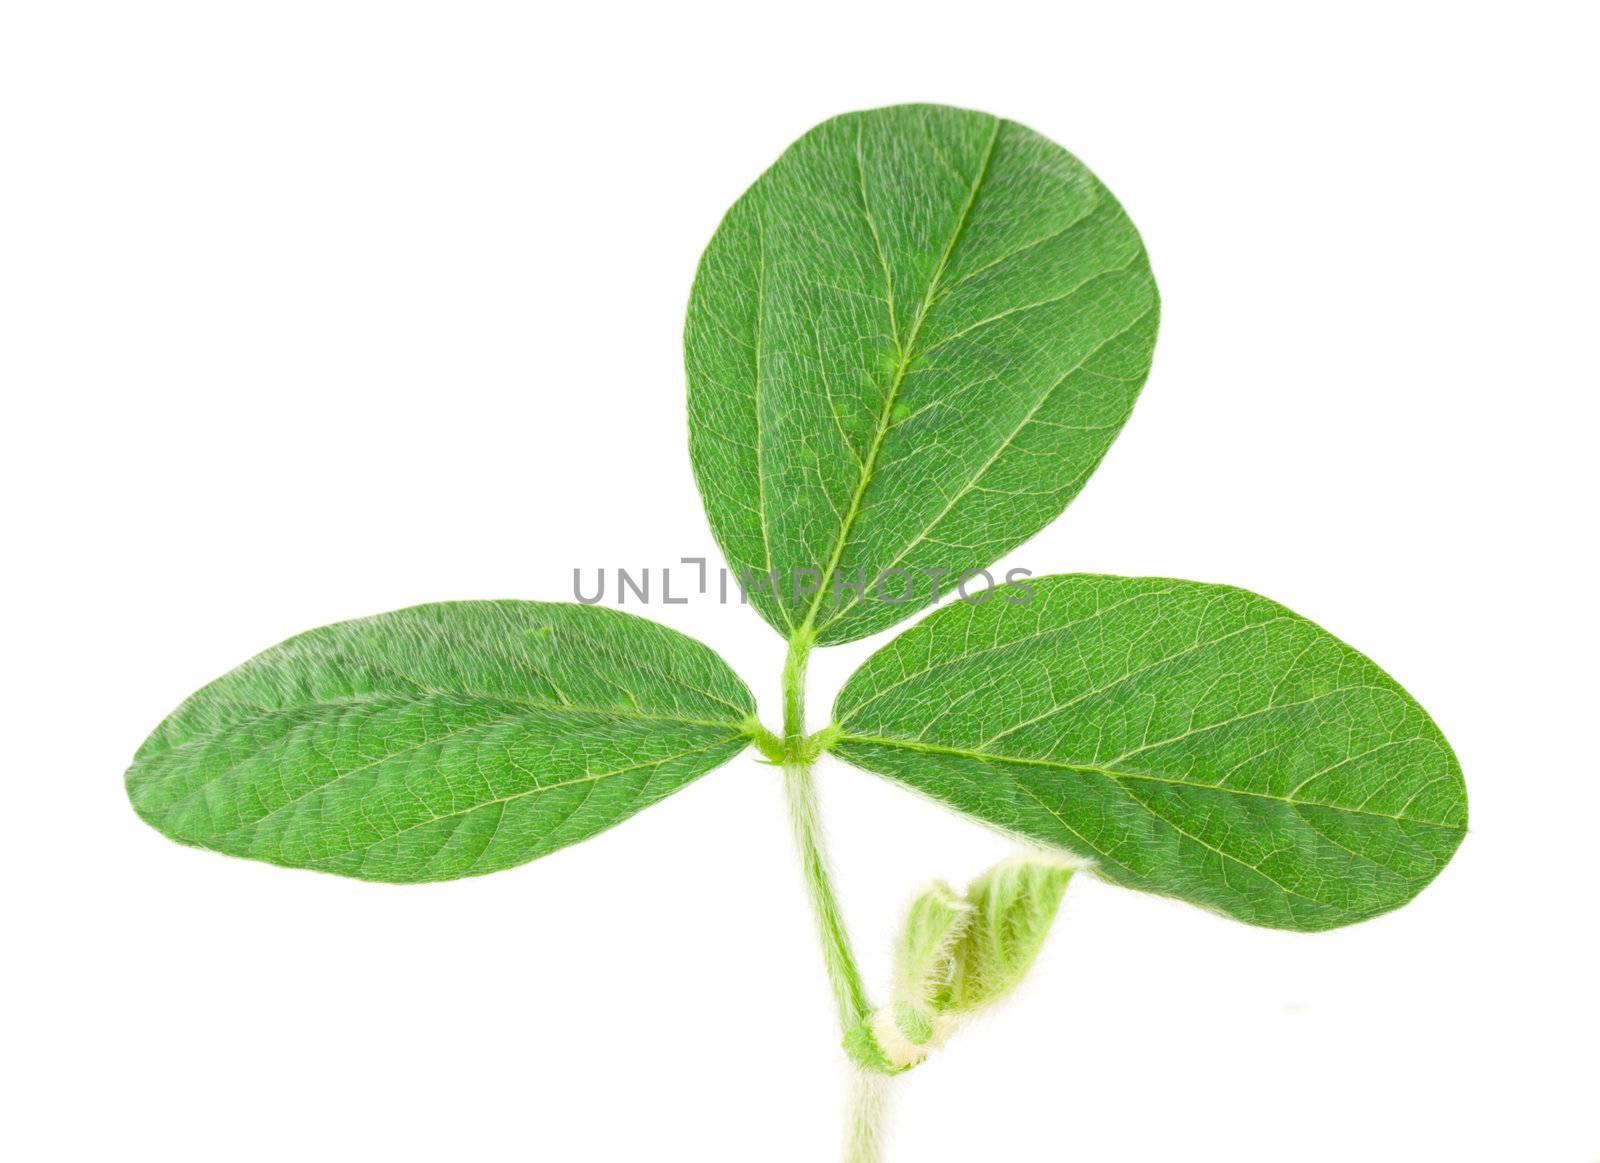 Soy leaf by vtorous